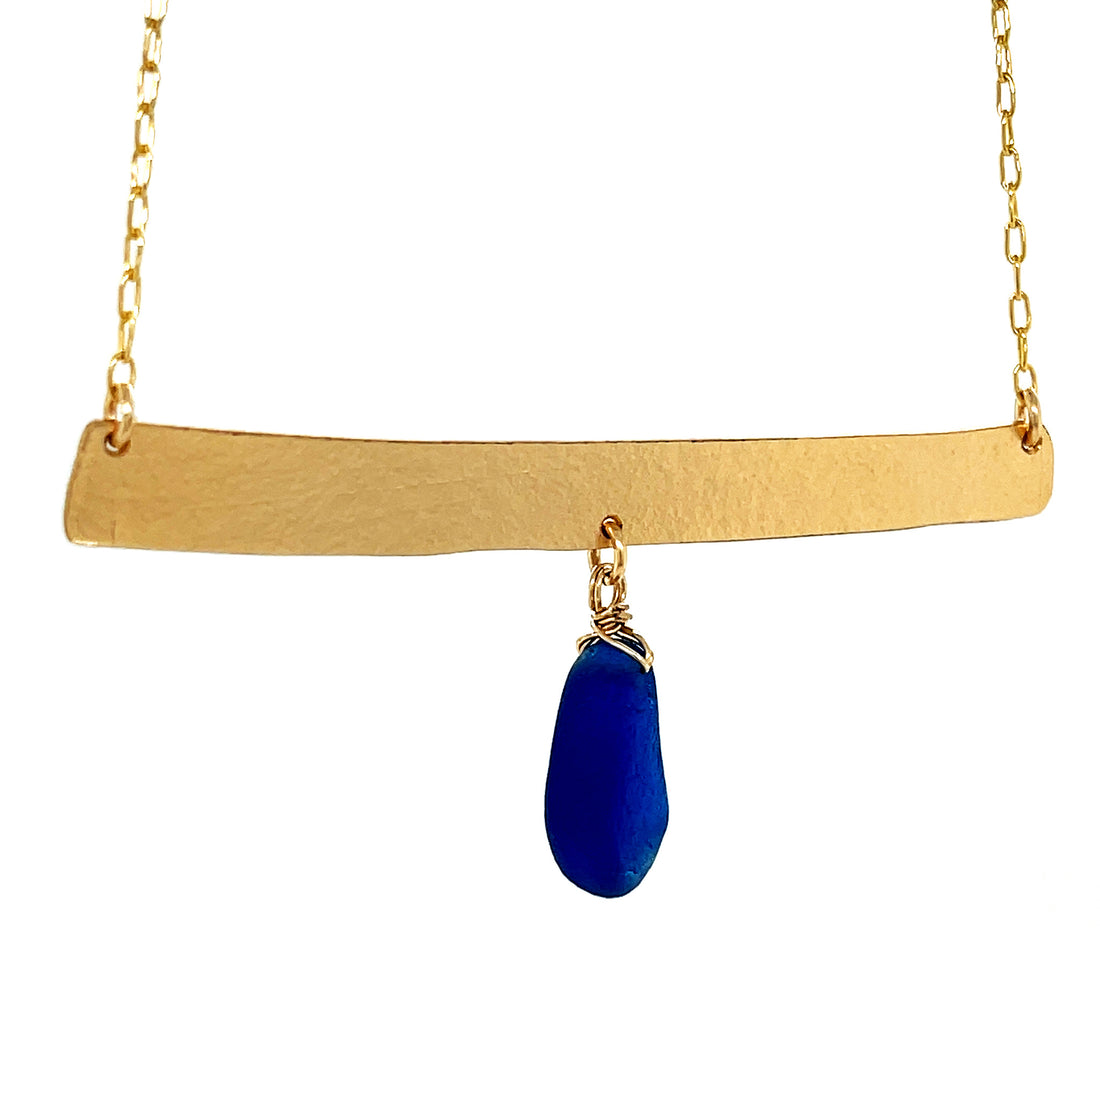 textured gold bar necklace australia